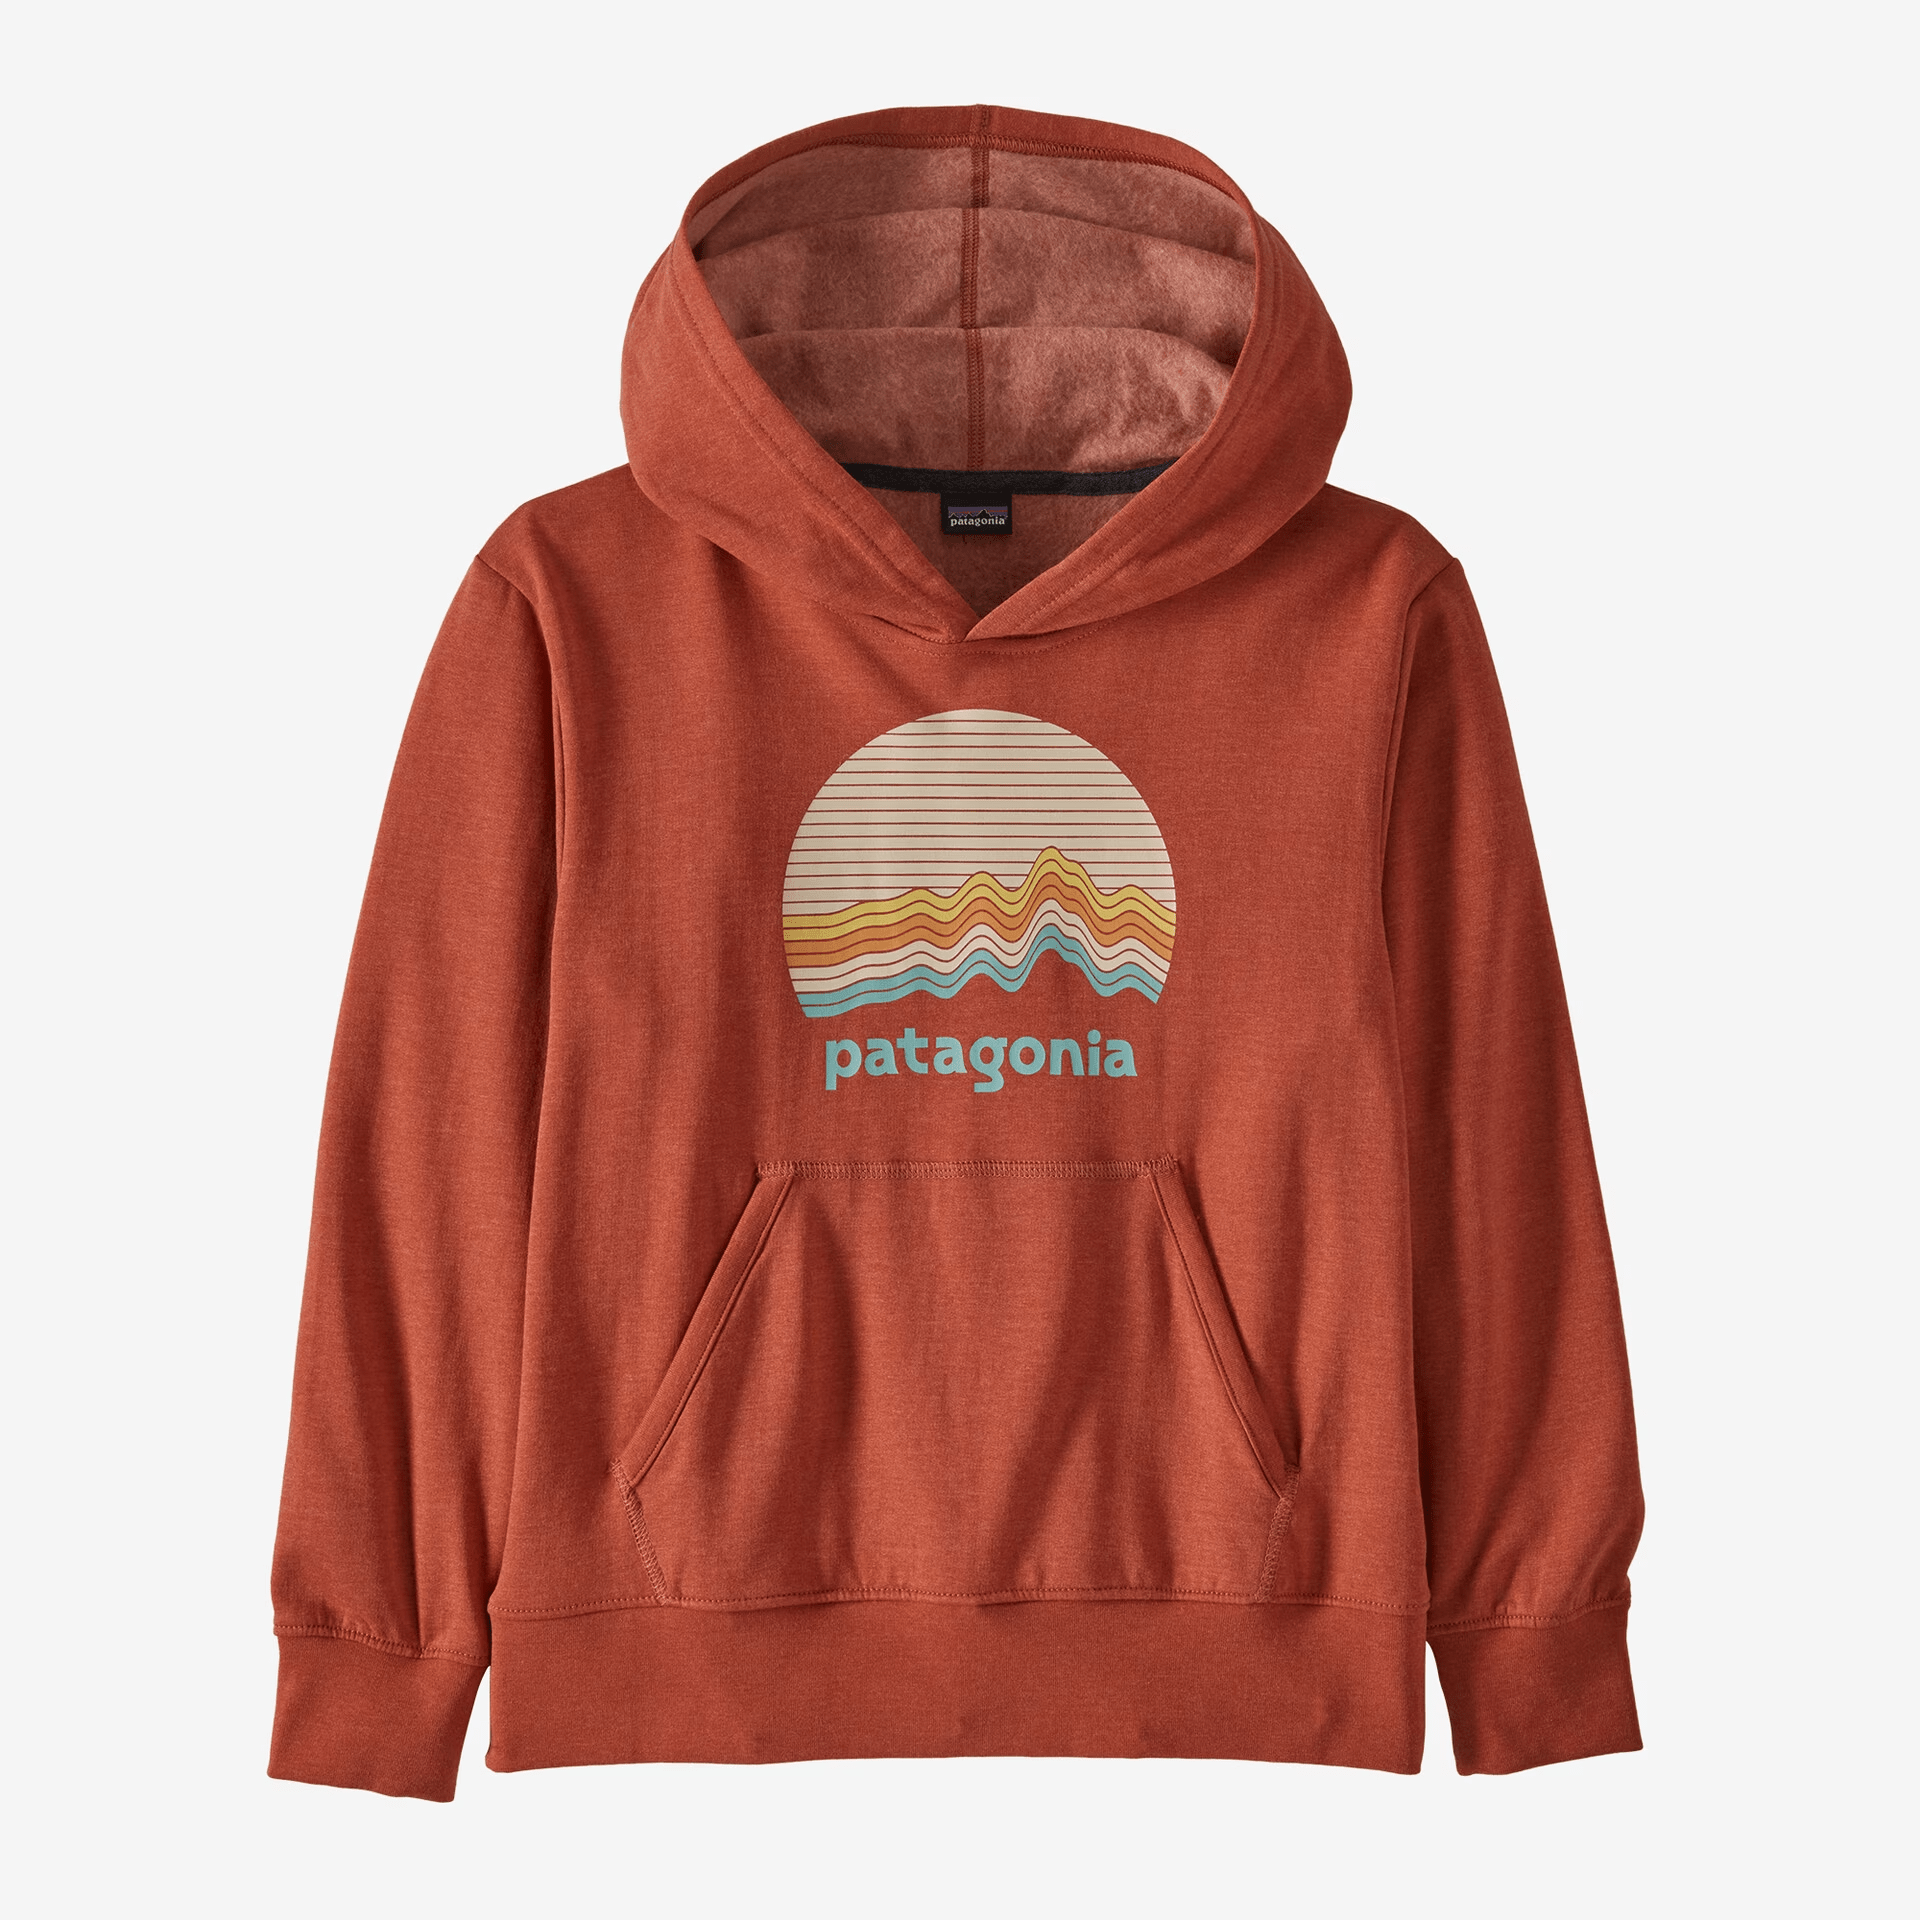 Patagonia Kids LW Graphic Hoody Sweatshirt - Mountain Kids Outfitters